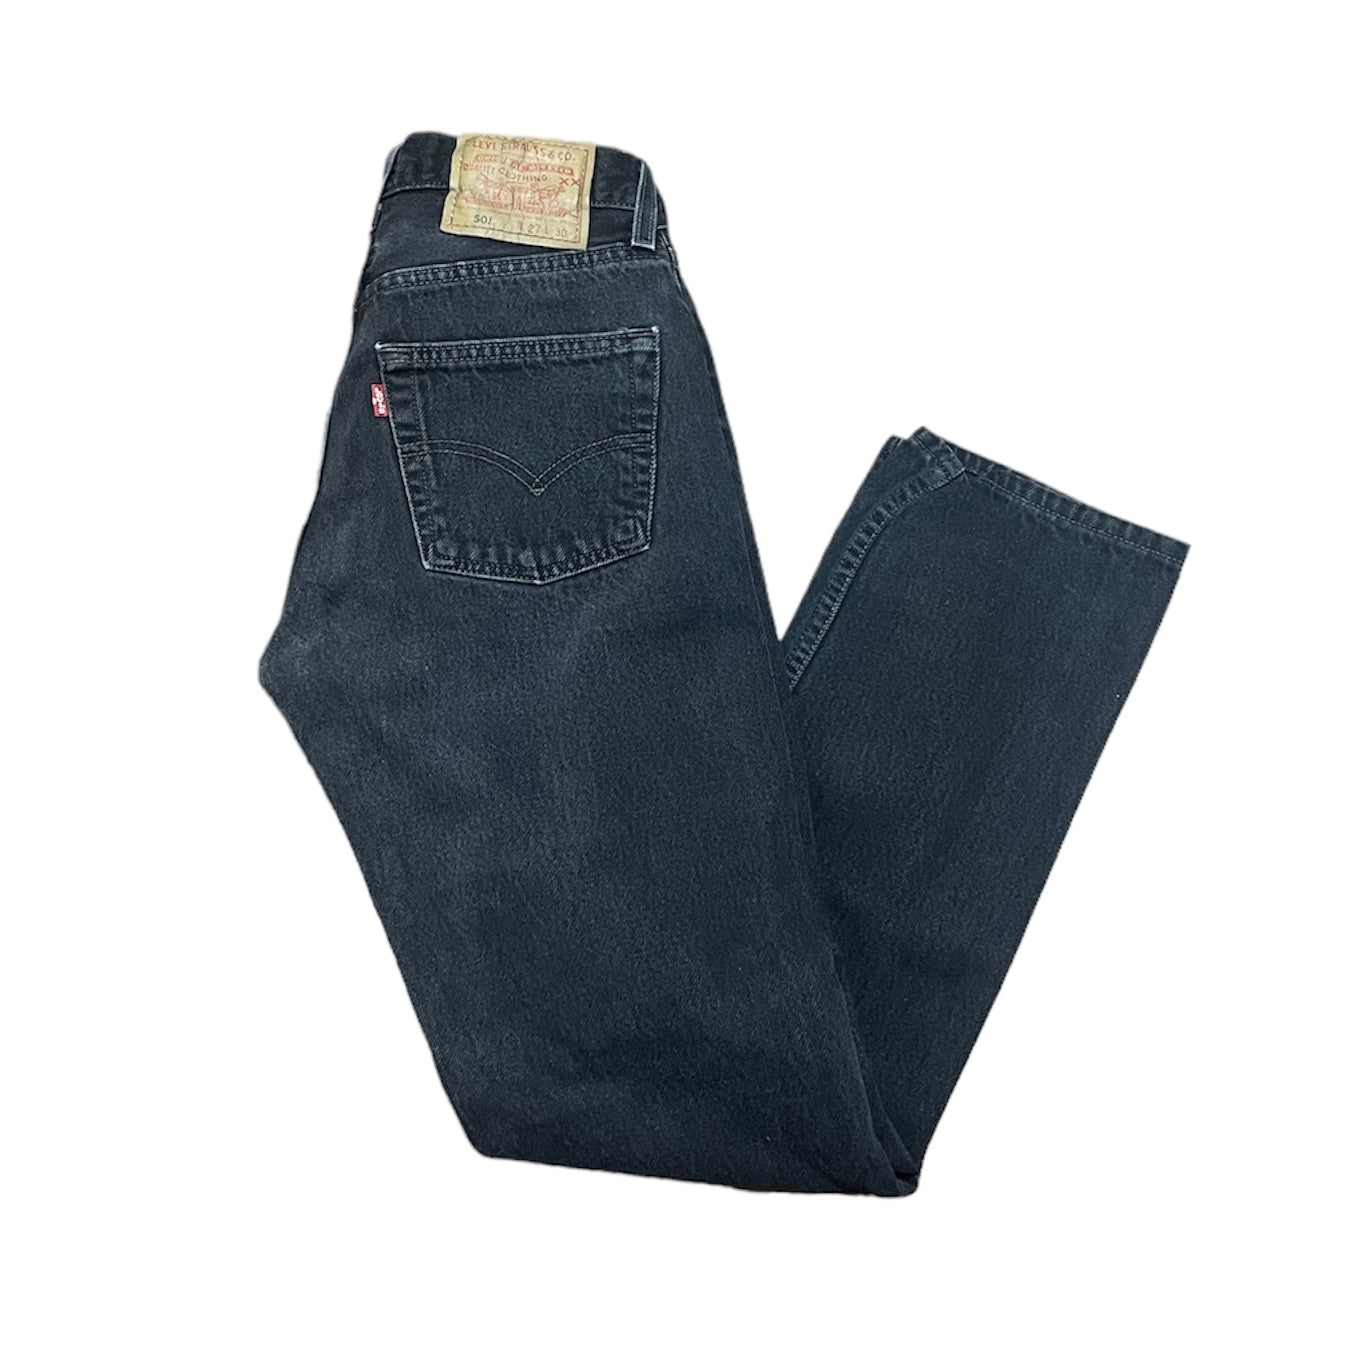 Vintage Levis 501 Washed Out Black Jeans (W27/L30)